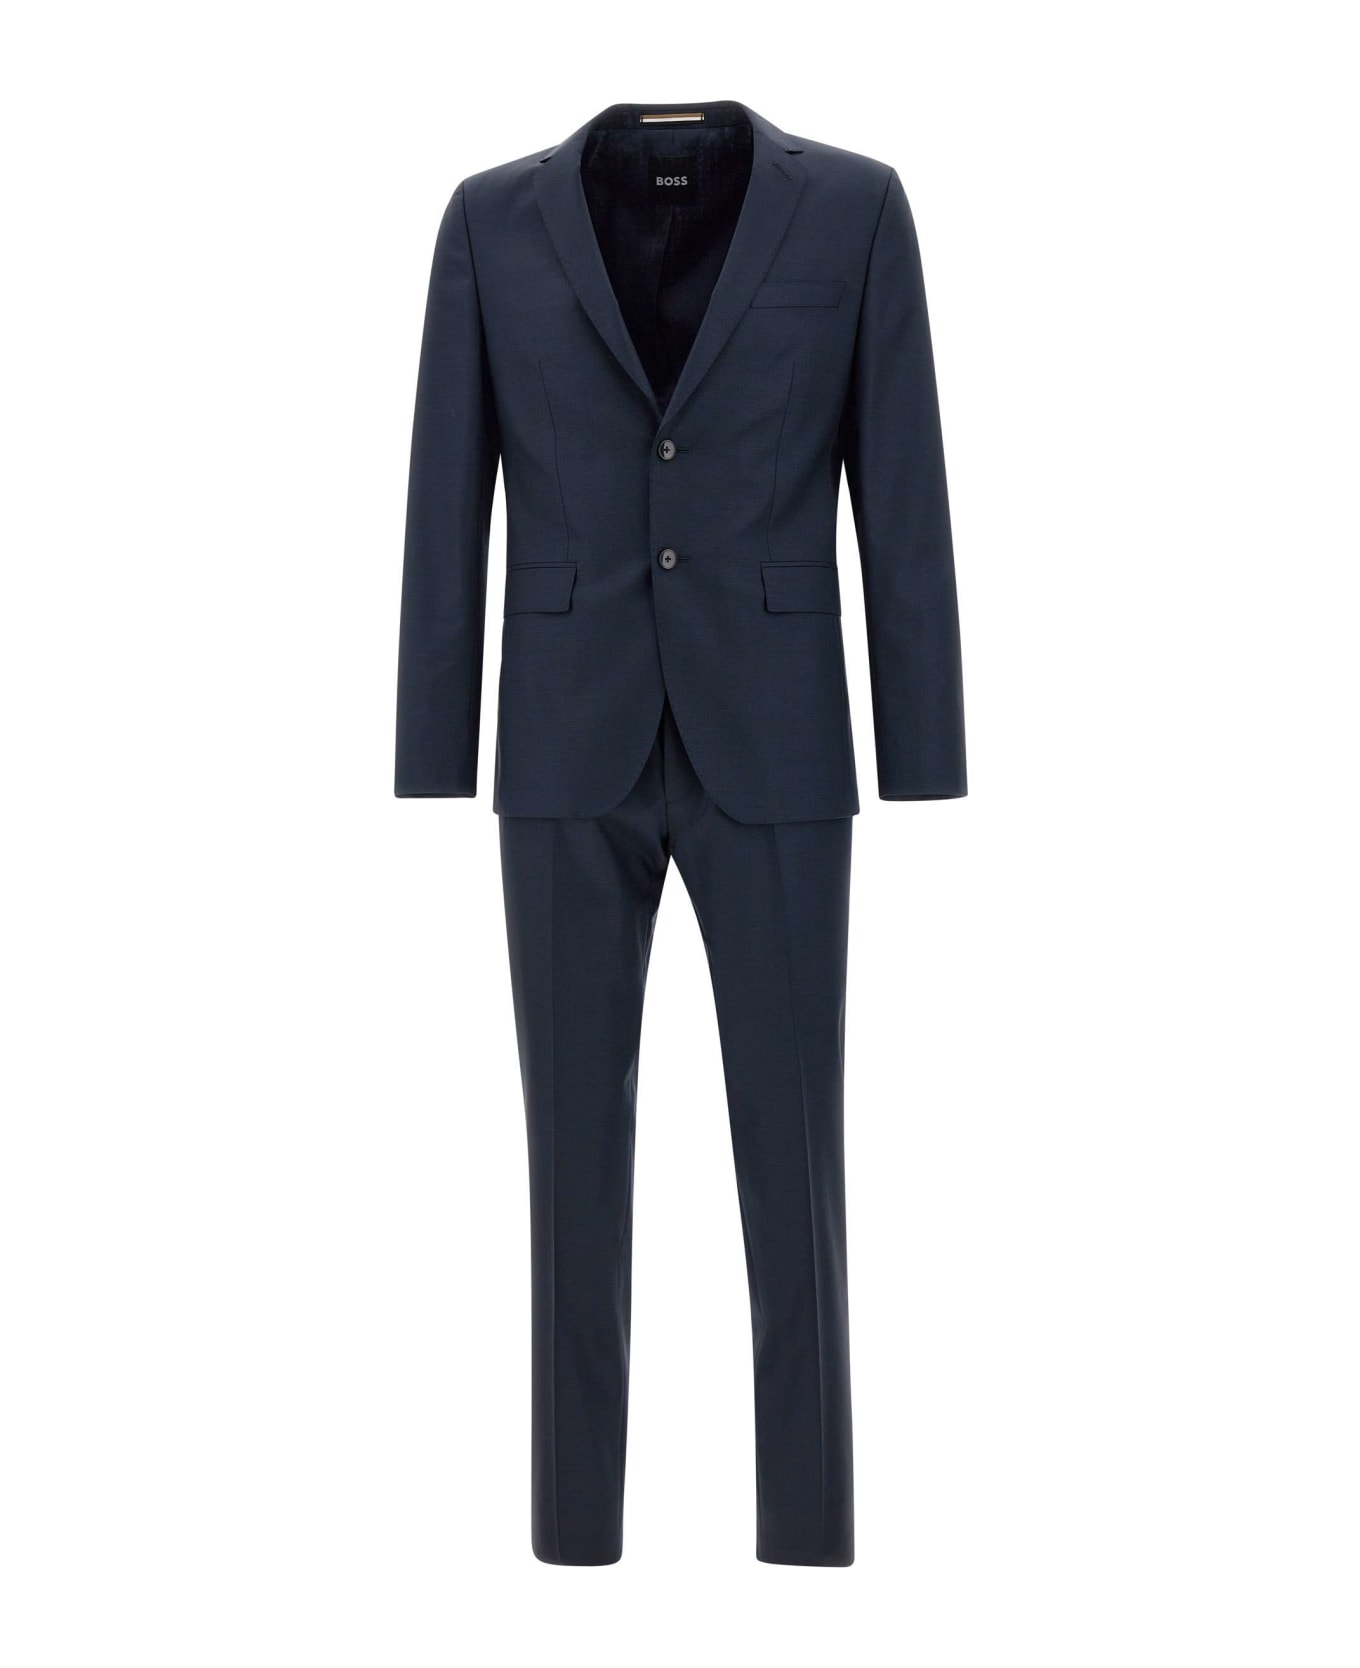 Hugo Boss "h-reymond" Suit - BLUE